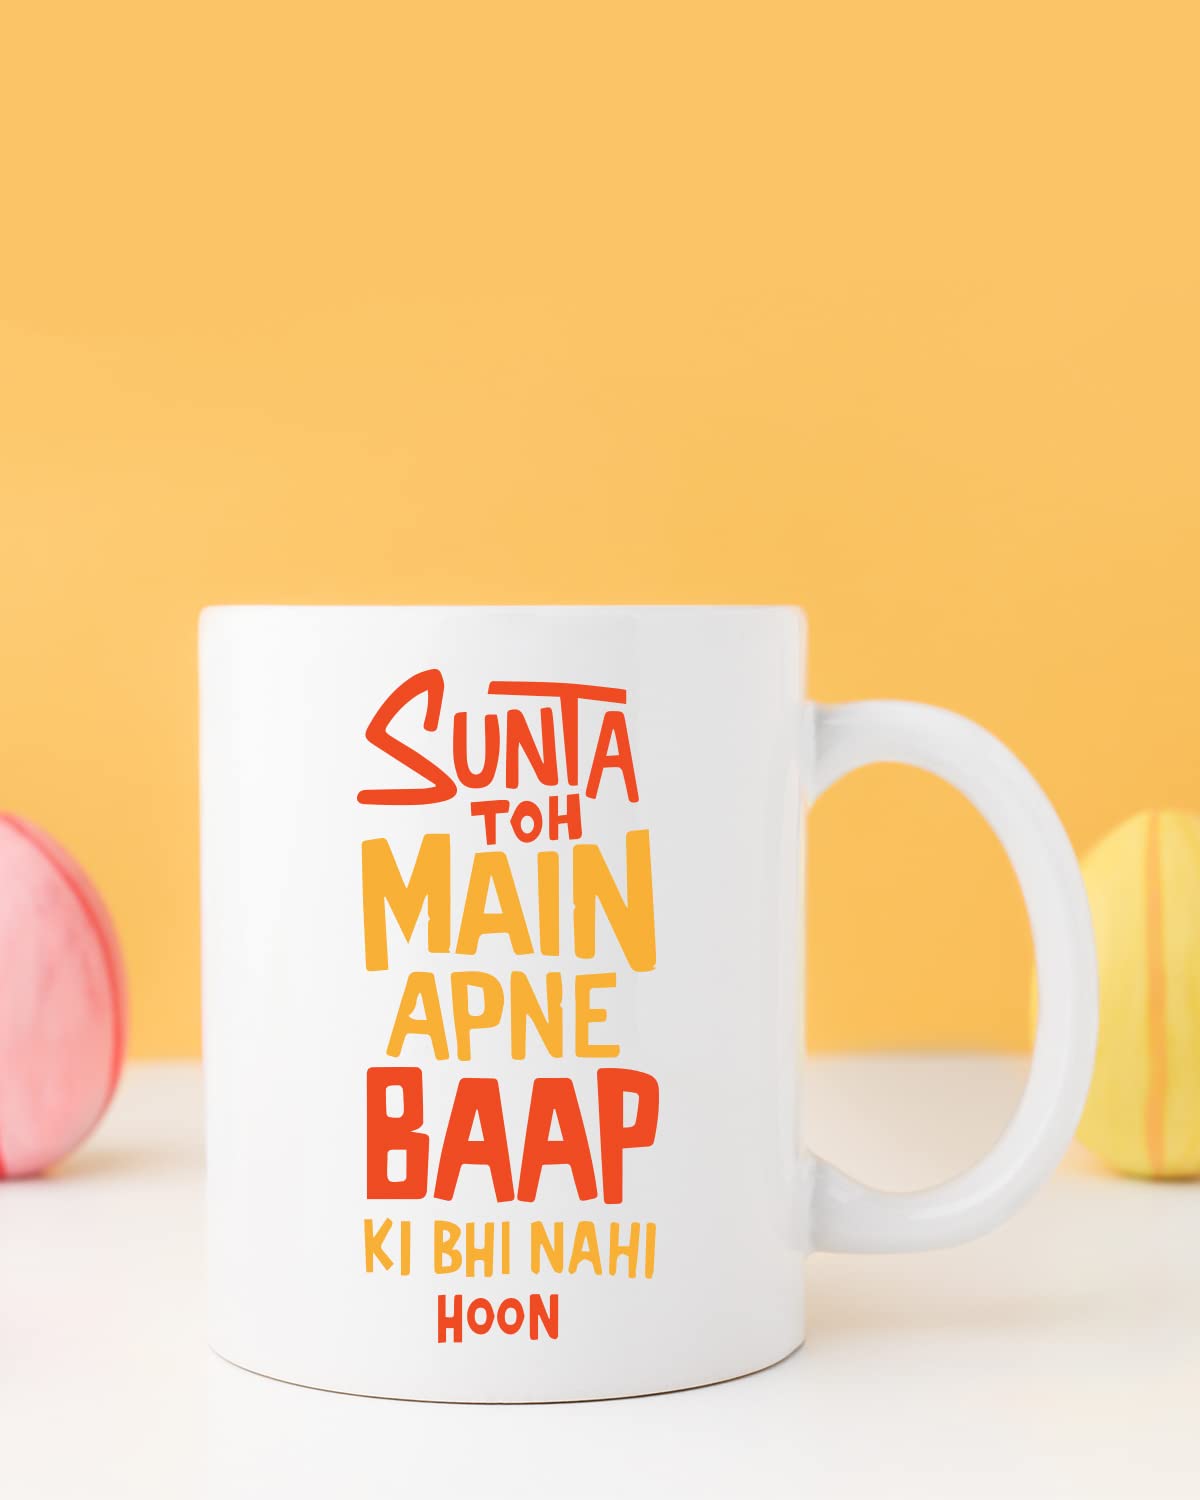 SUNTA TOH Main APNE BAAP KI NHI Coffee Mug - Gift for Friend, Birthday Gift, Birthday Mug, Printed with Funny & Funky Dialogues, Bollywood & Web Series Mugs, Funny Mugs